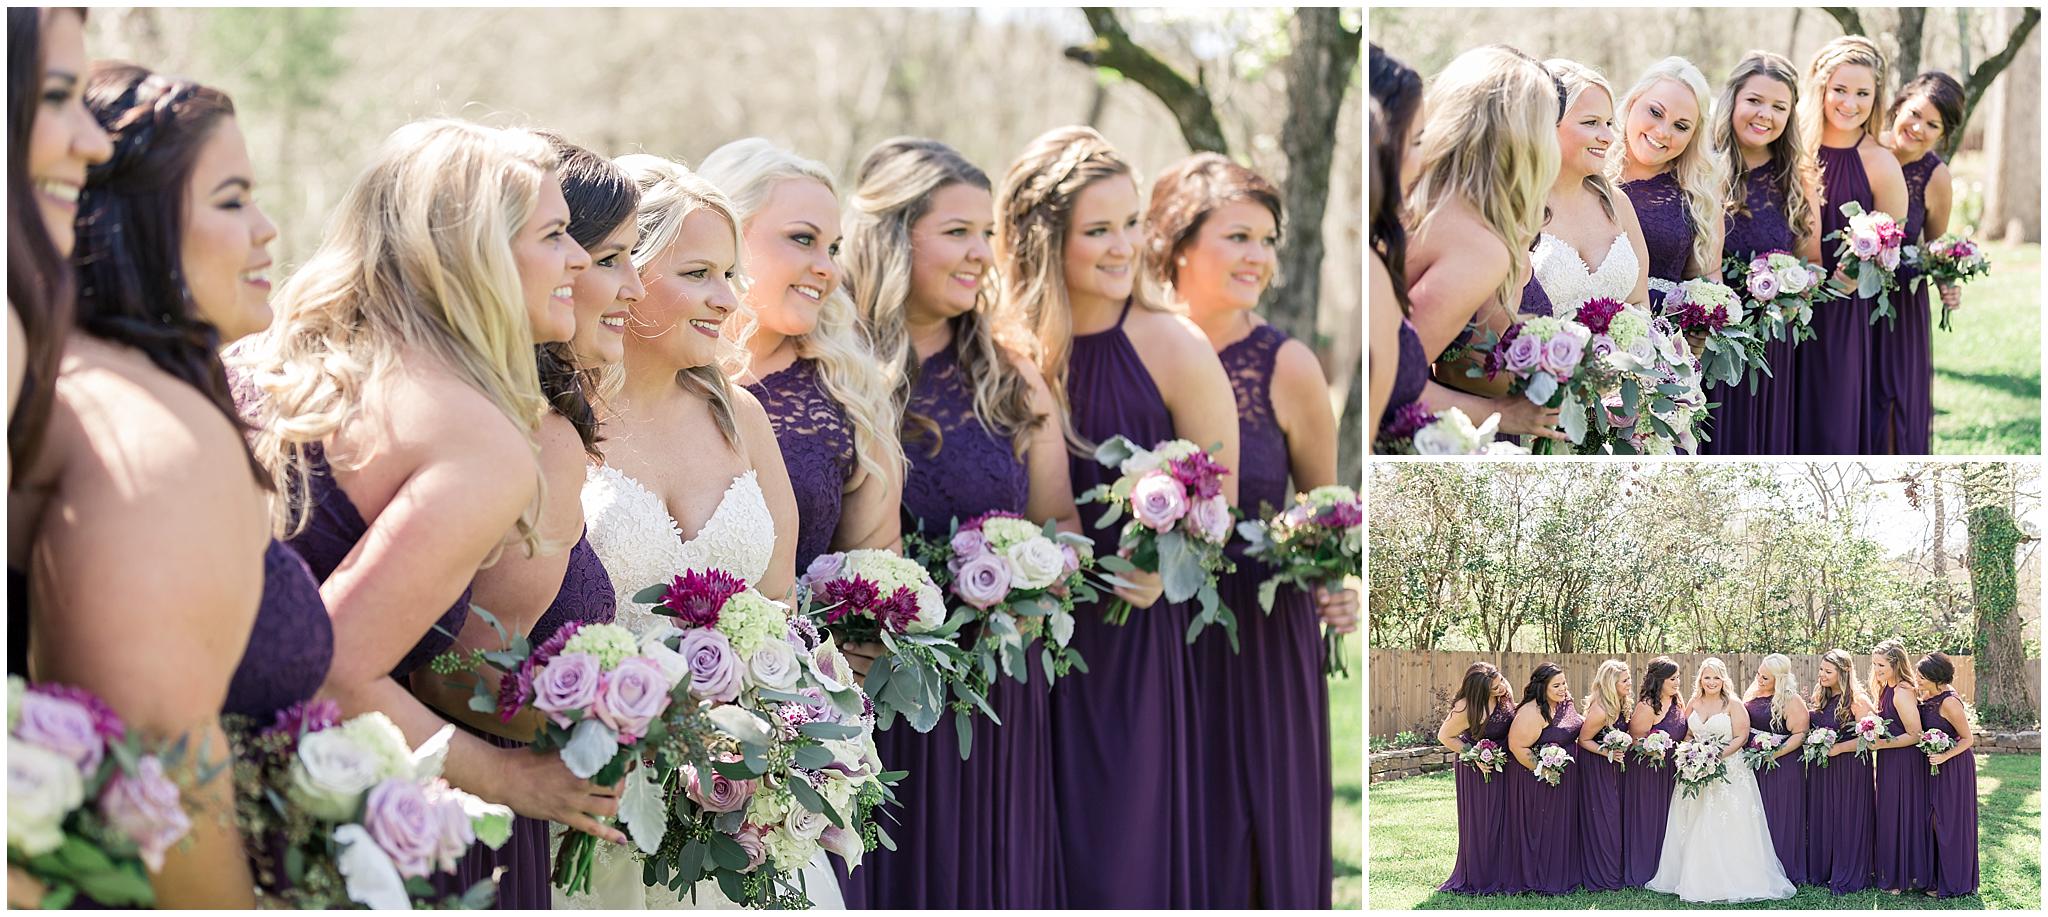 purple bridesmaids dresses 9 oaks farm spring wedding pictures_0002.jpg